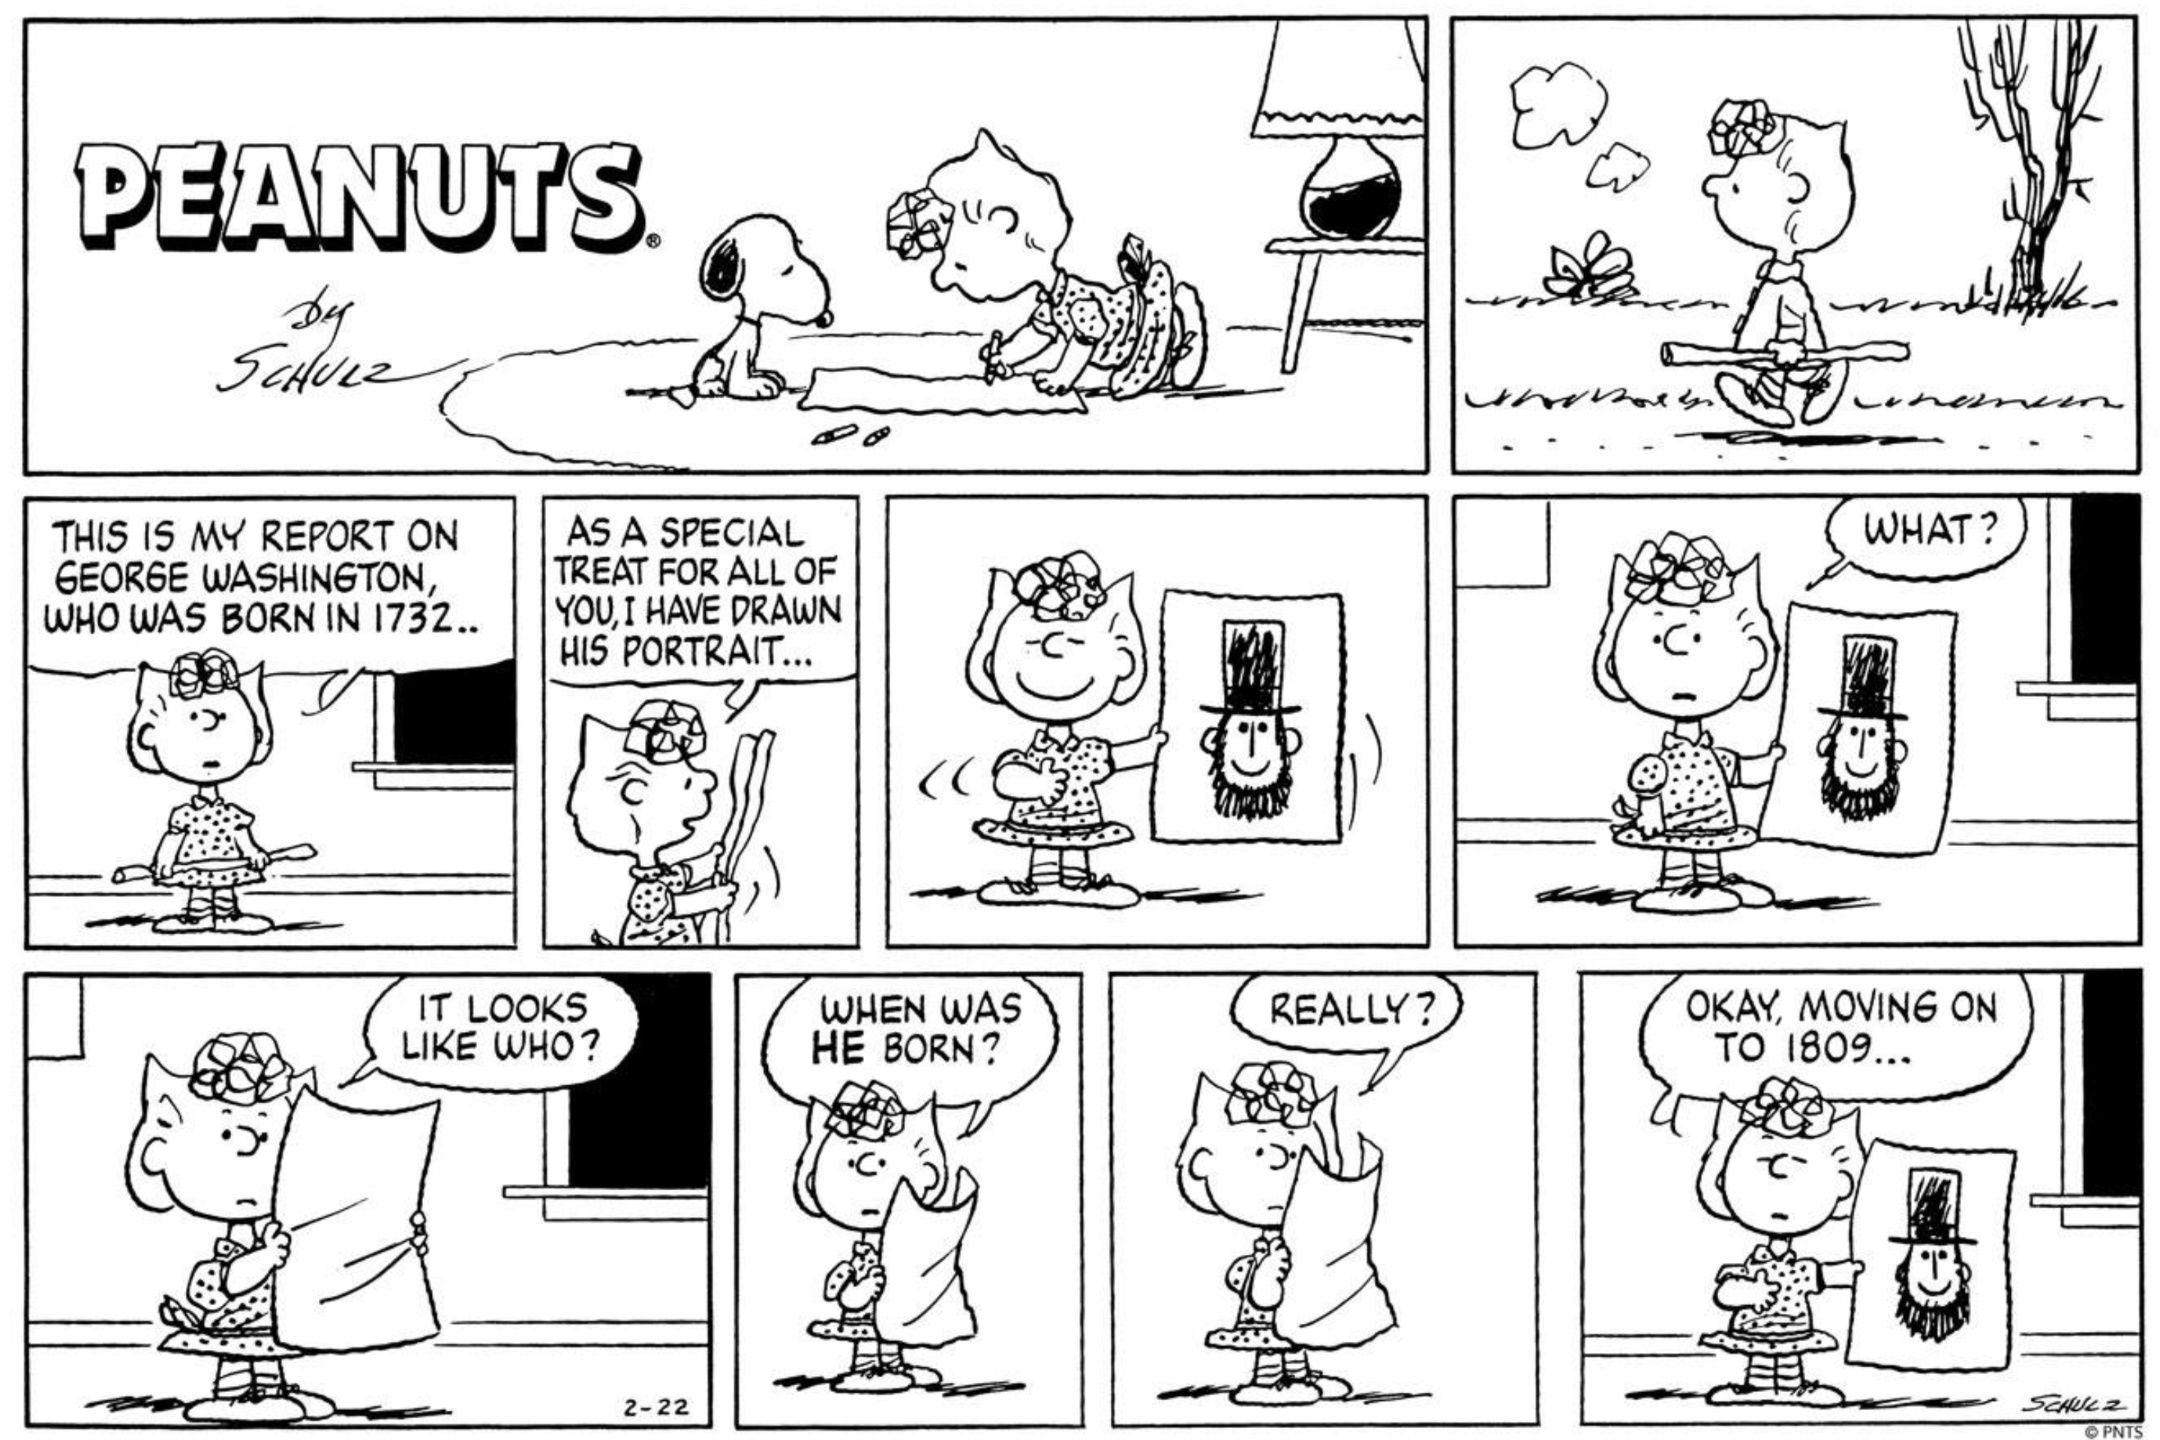 Sally giving a presenation in Peanuts.